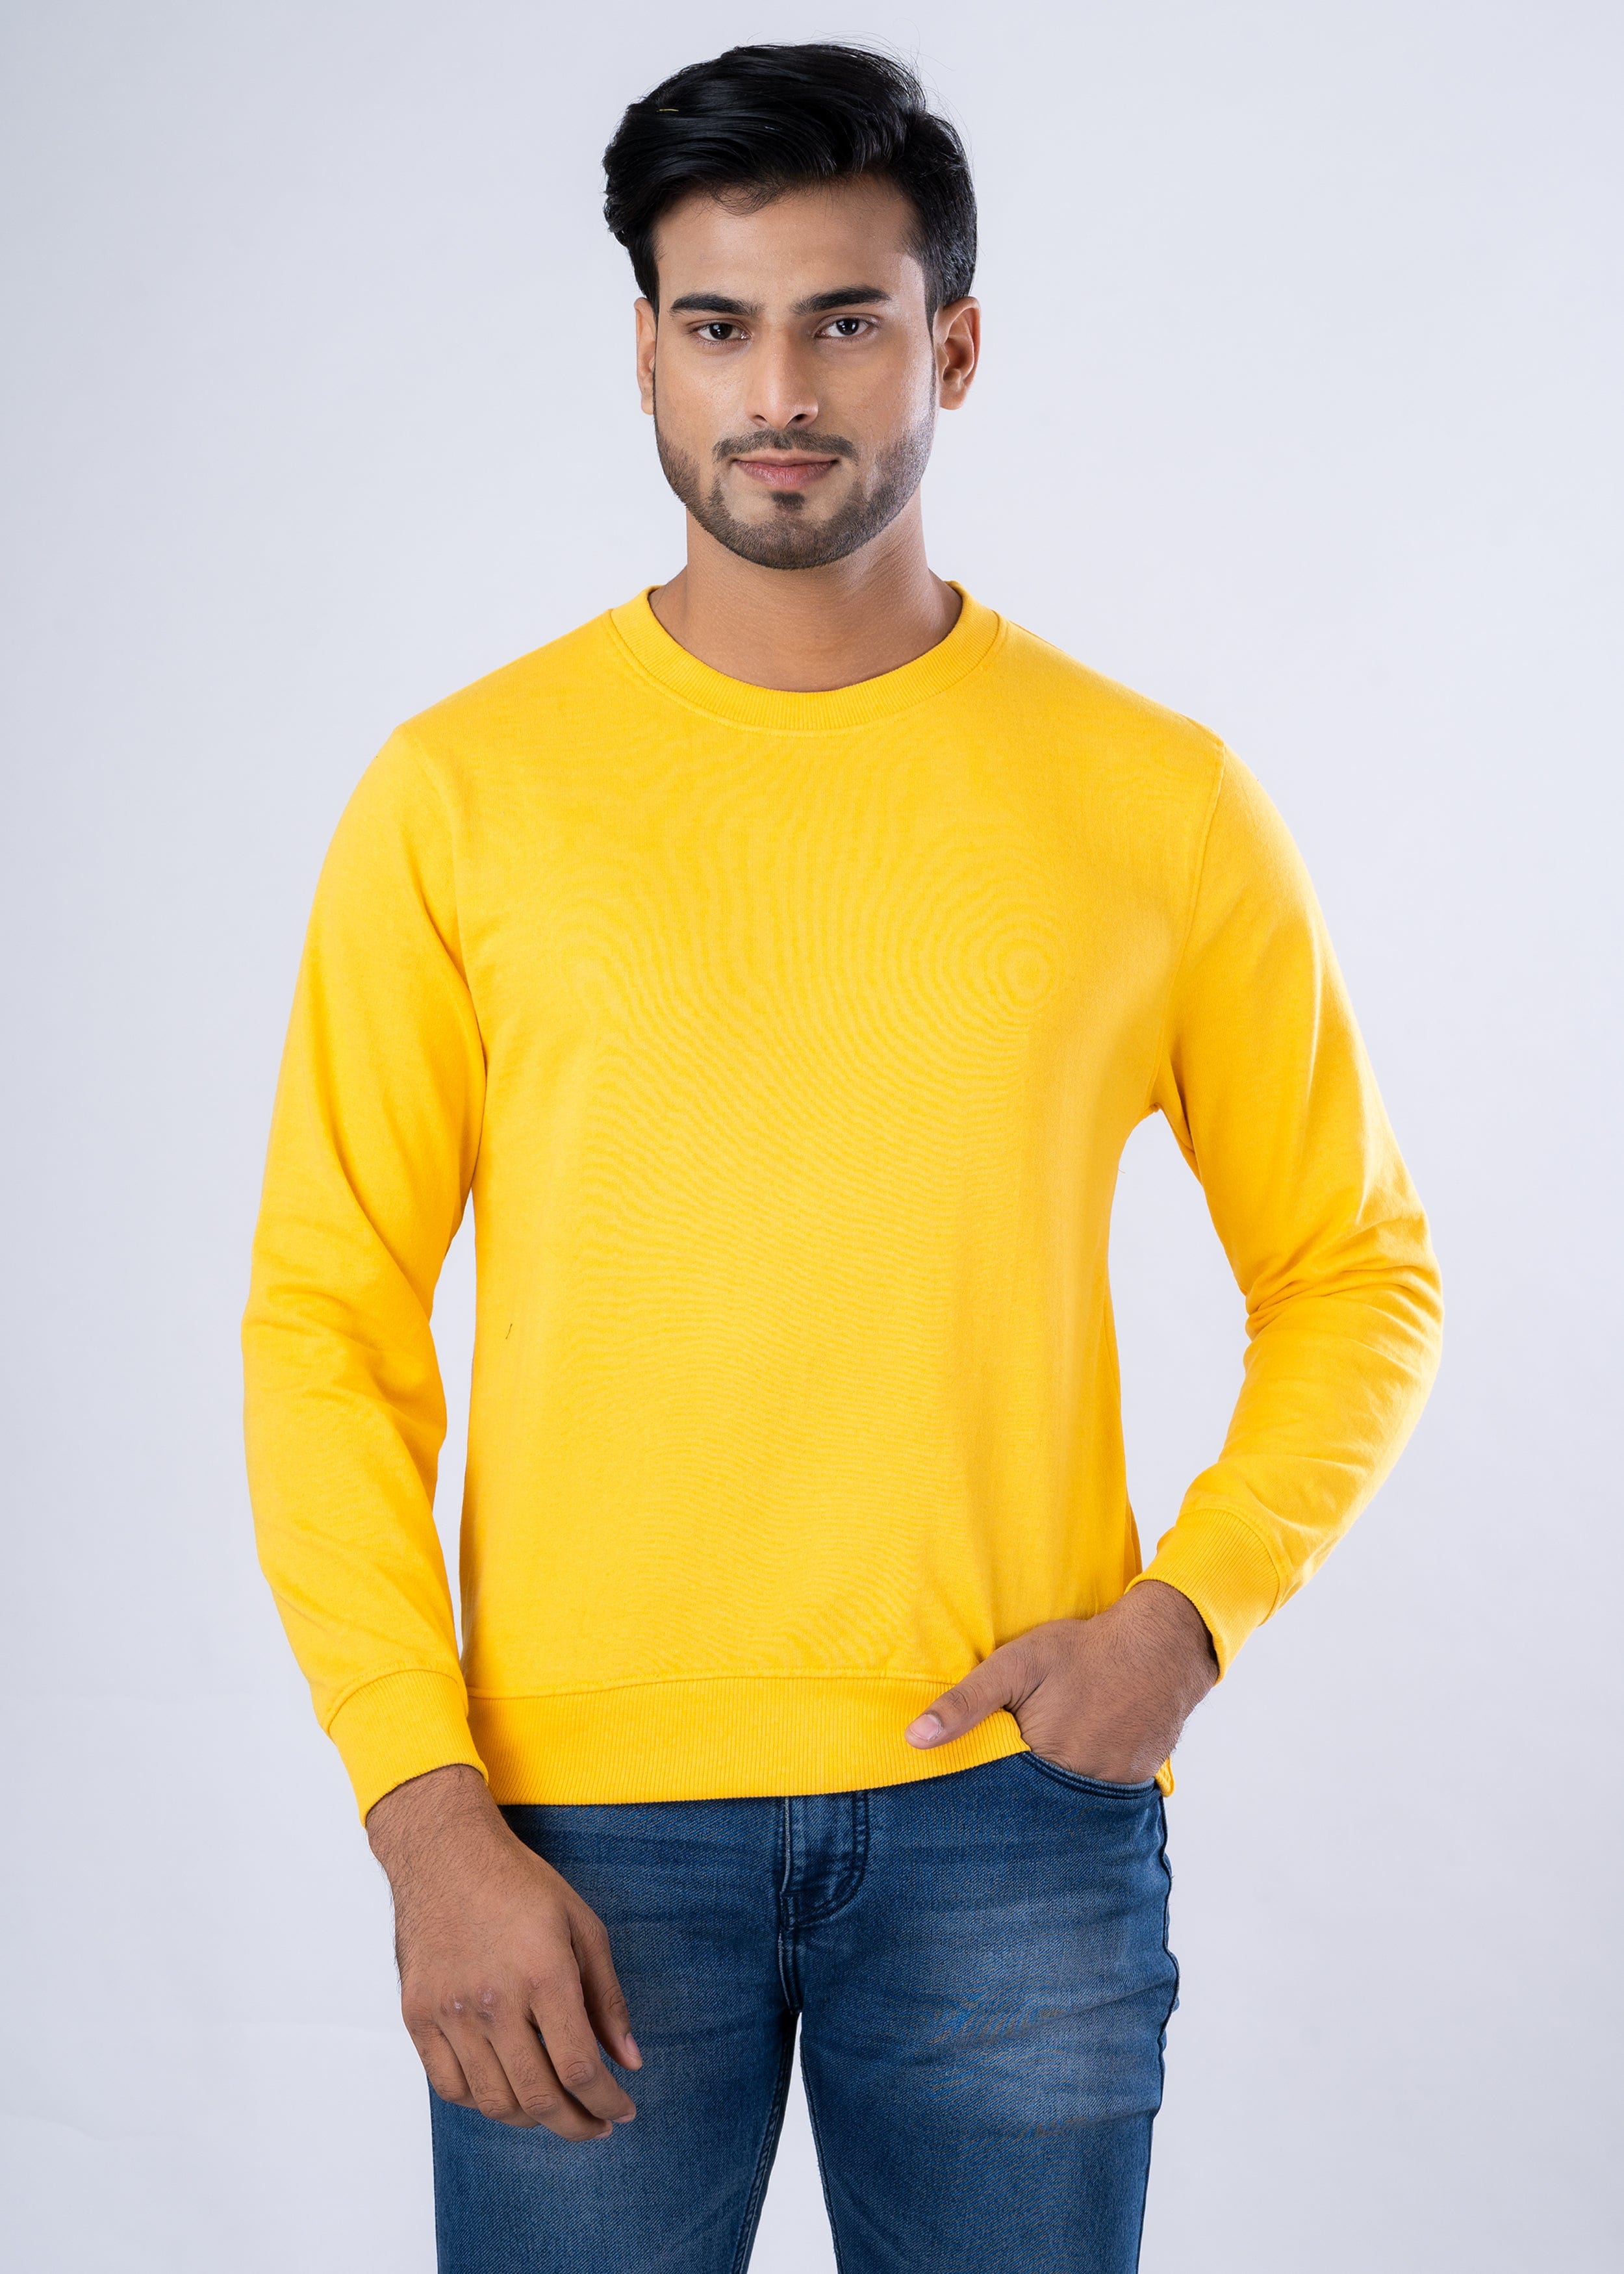 Solid Premium Cotton Sweatshirt For Men